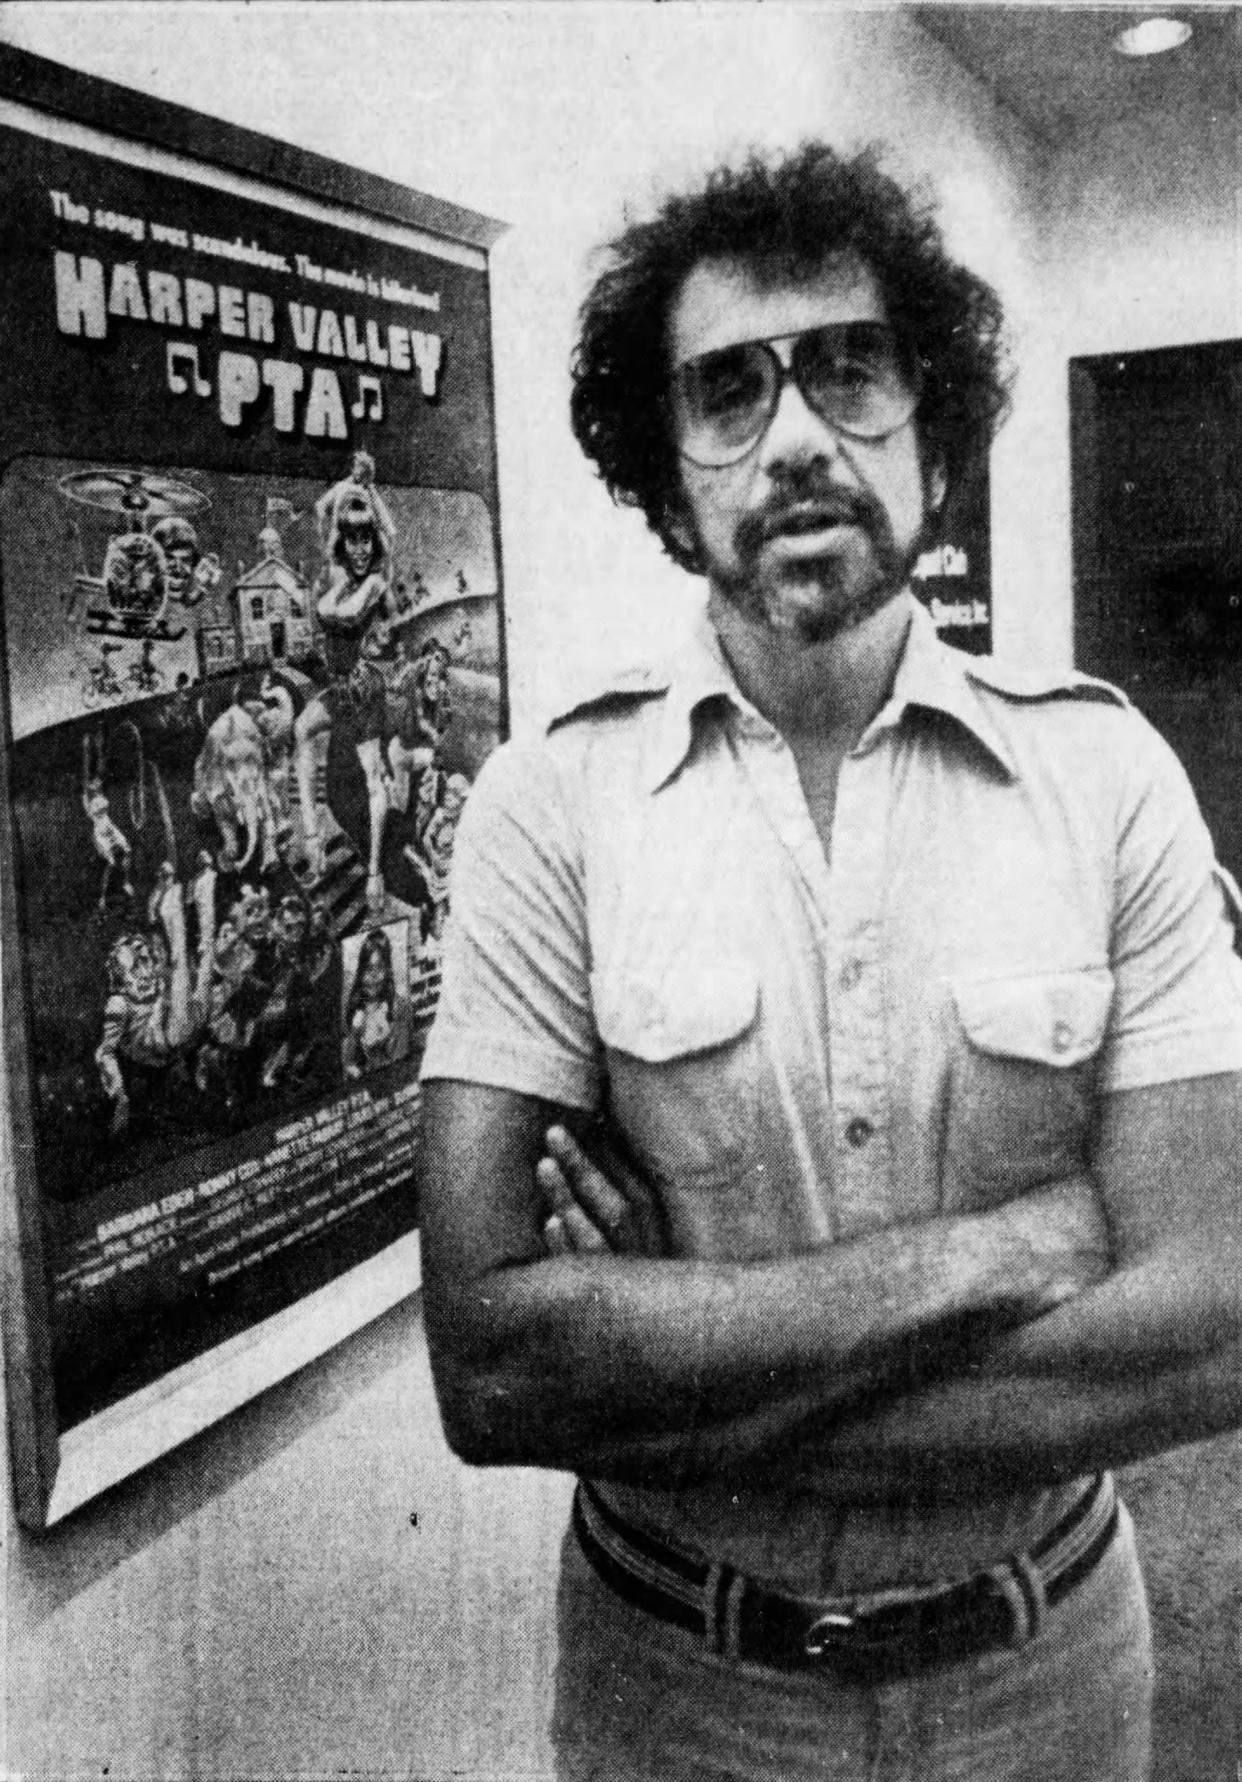 September 13, 1981: Phil Borack, producer of the film “Harper Valley P.T.A.”